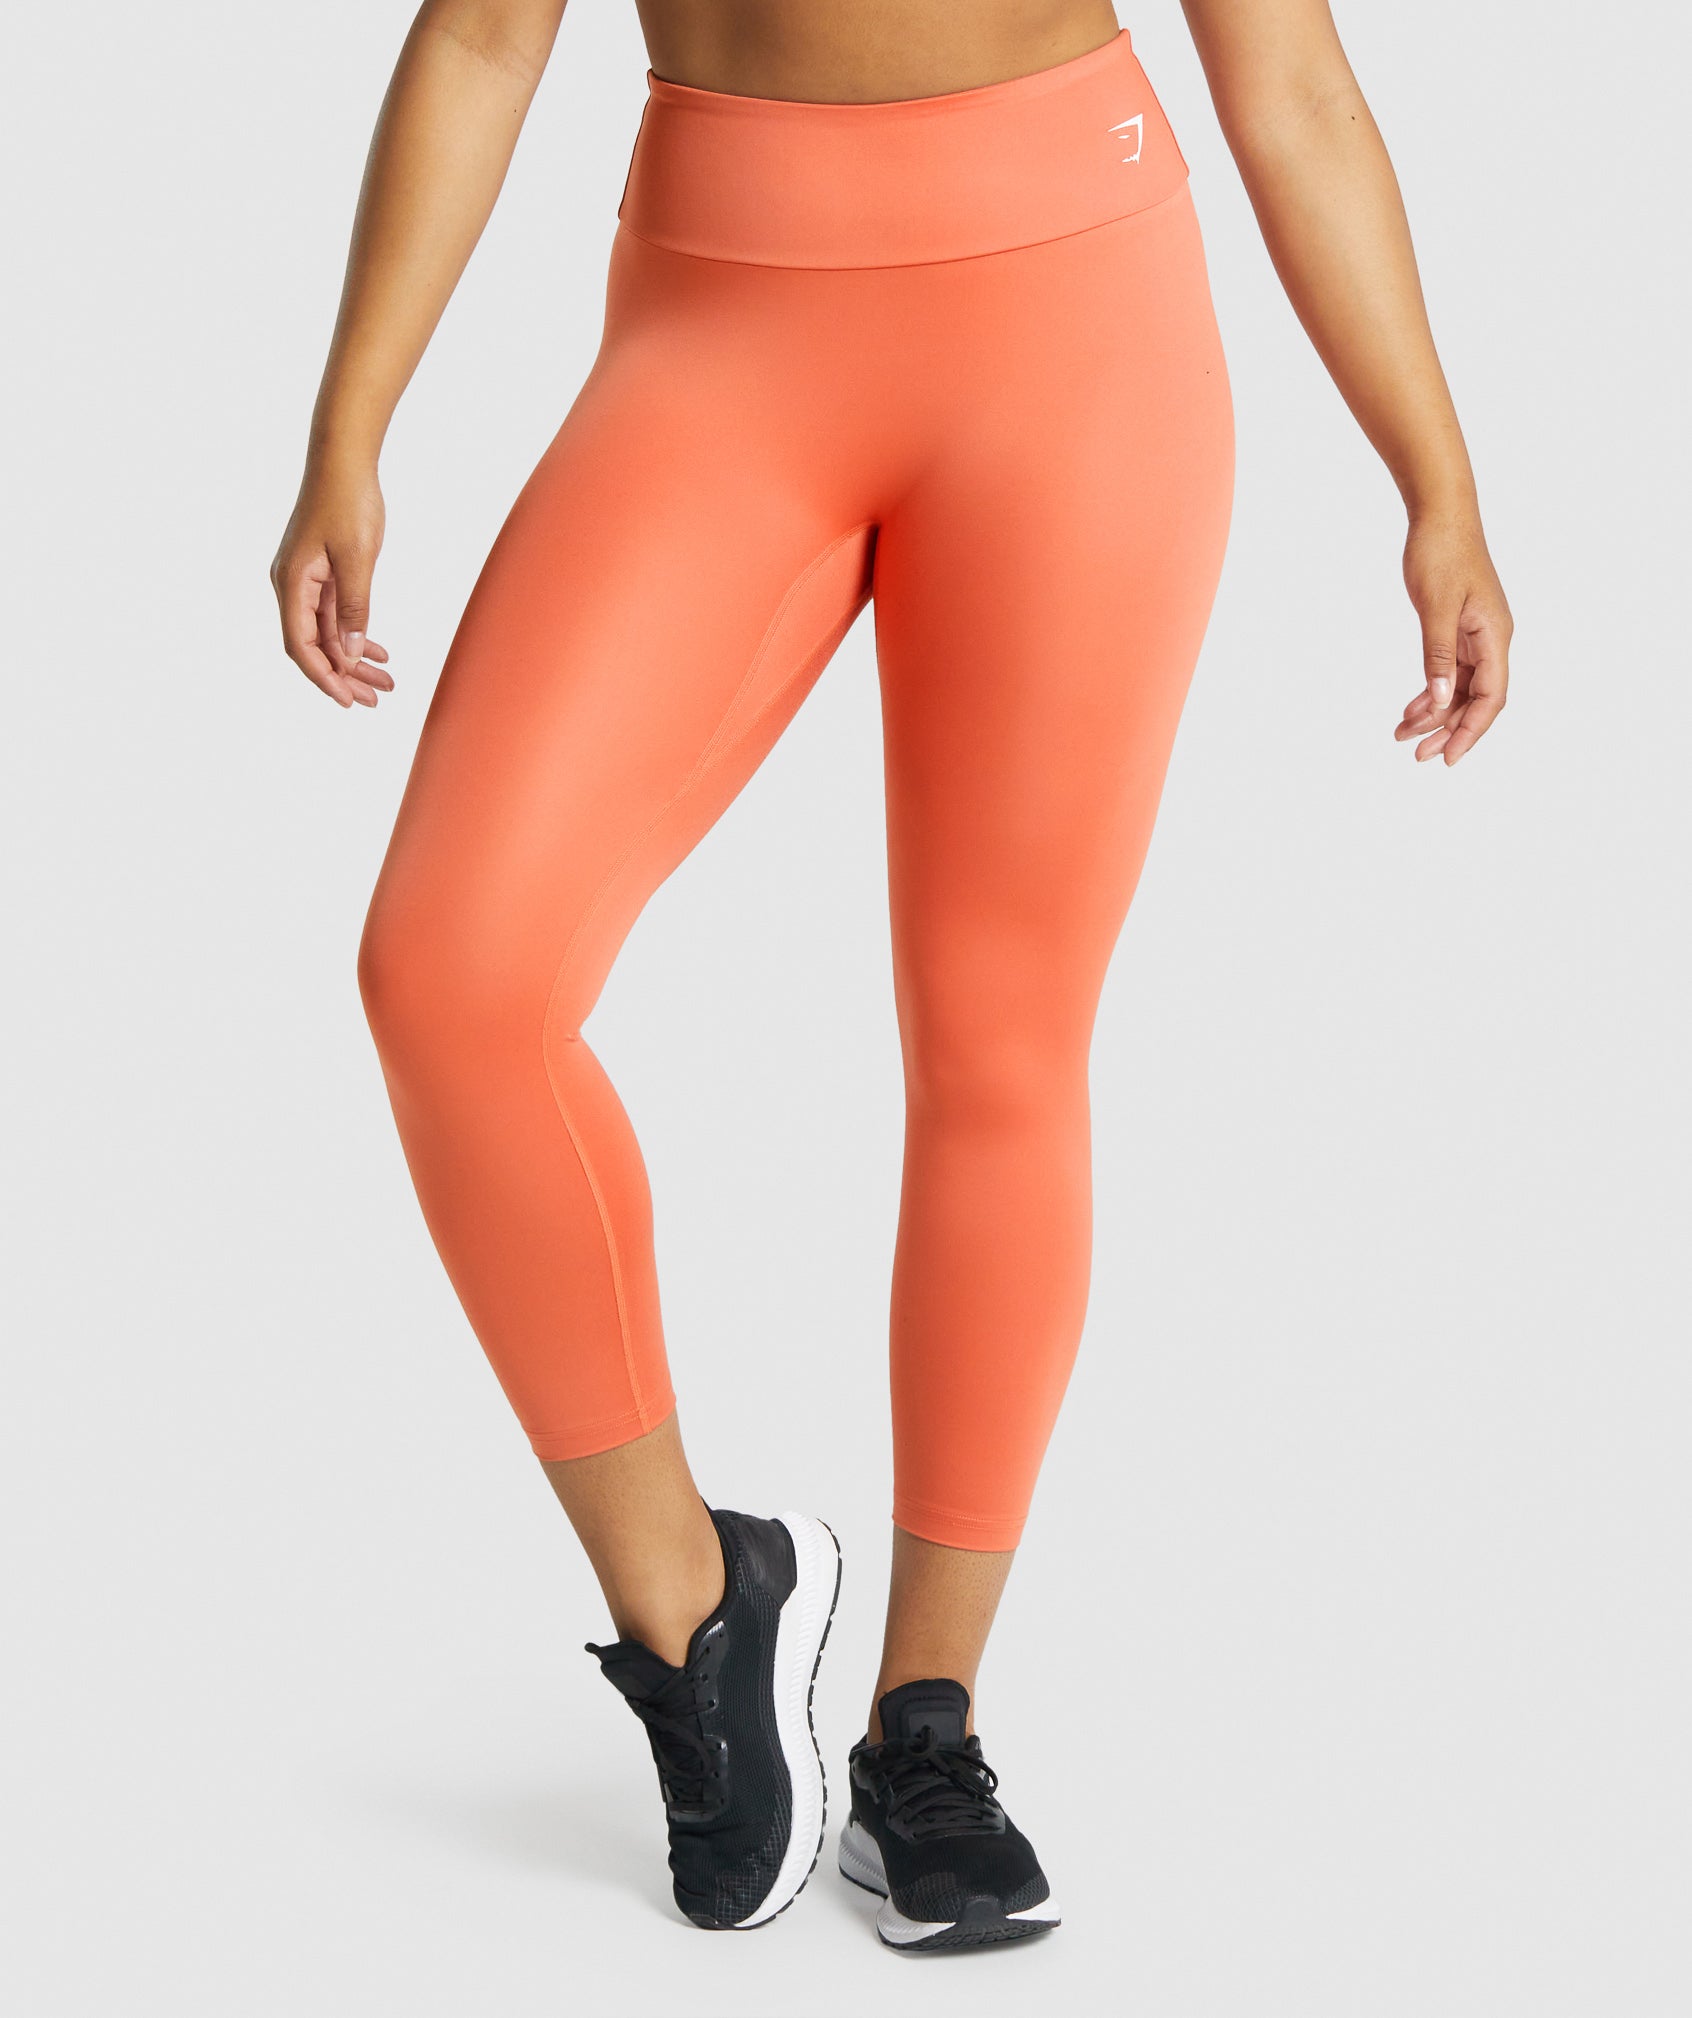 Orange Gymshark Underwear M Outlet - Gymshark Store Online